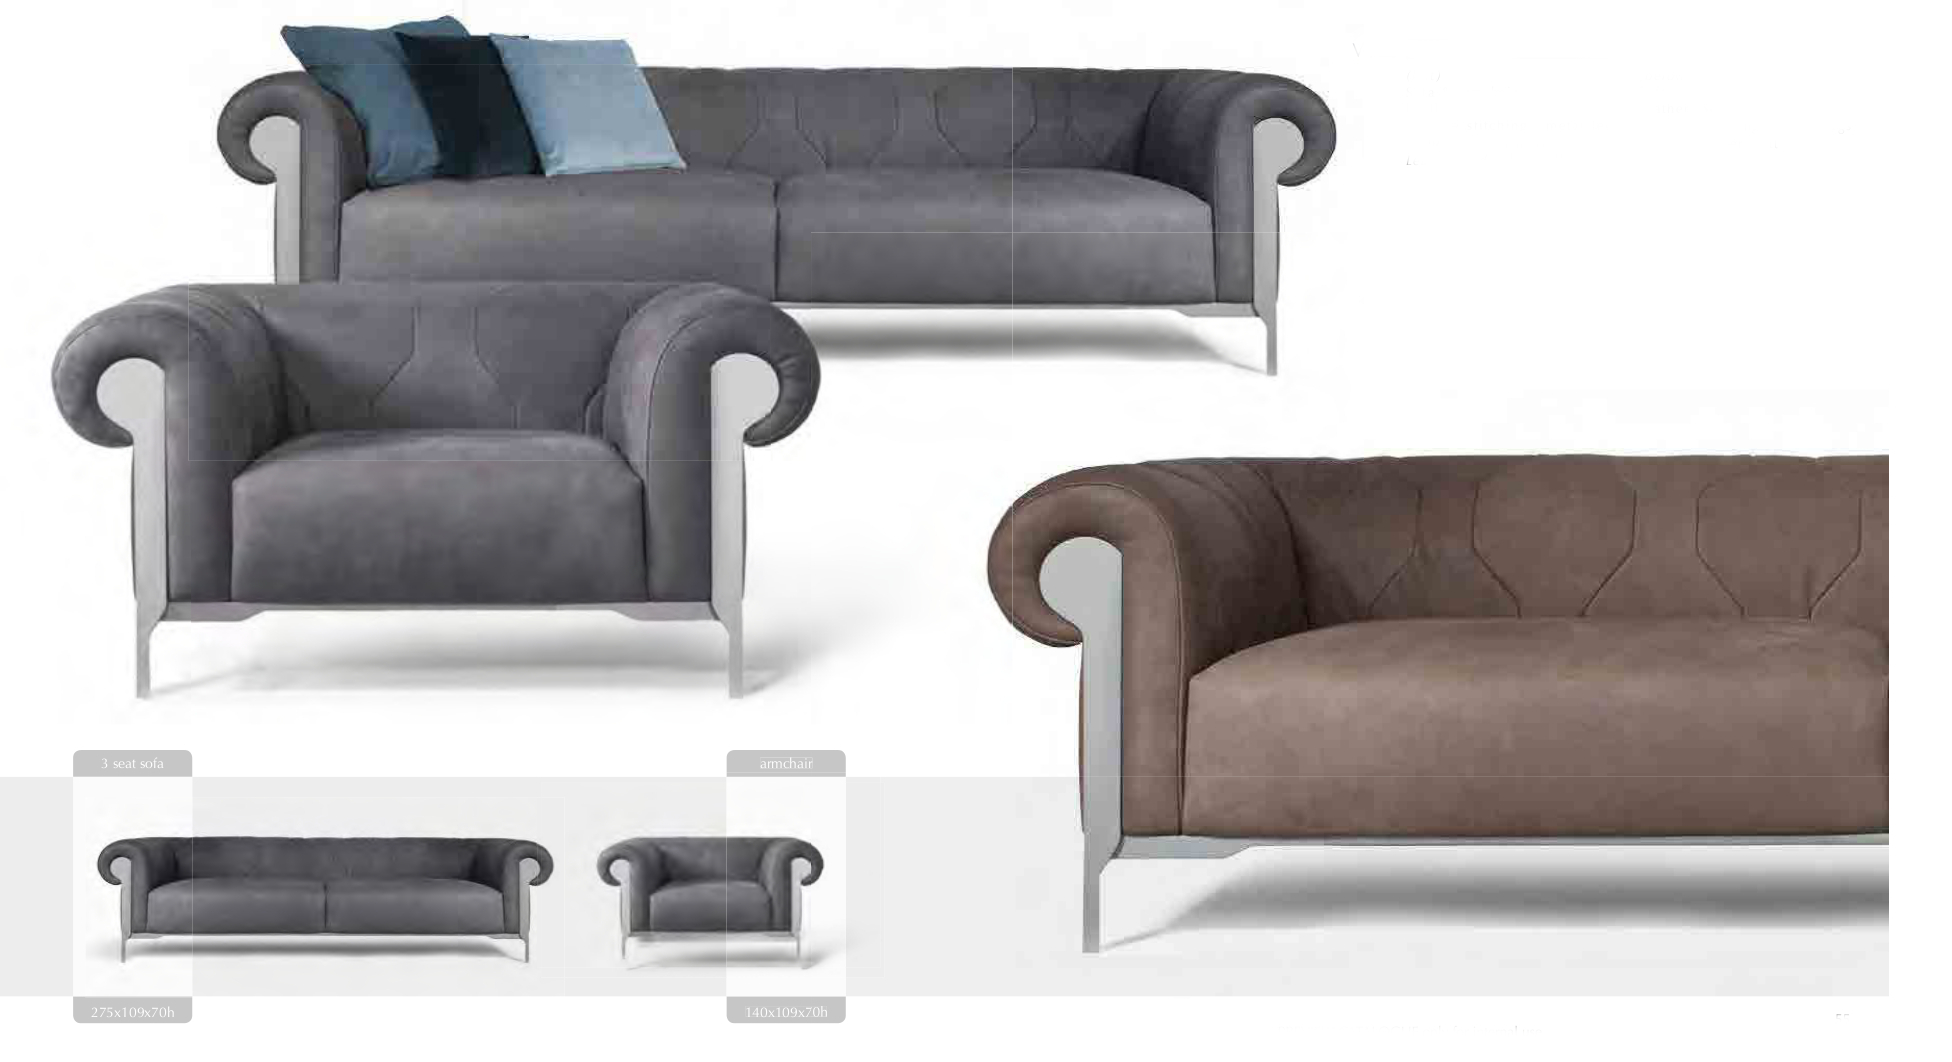 aston martin v125 sofa and armchair marbella .jpg